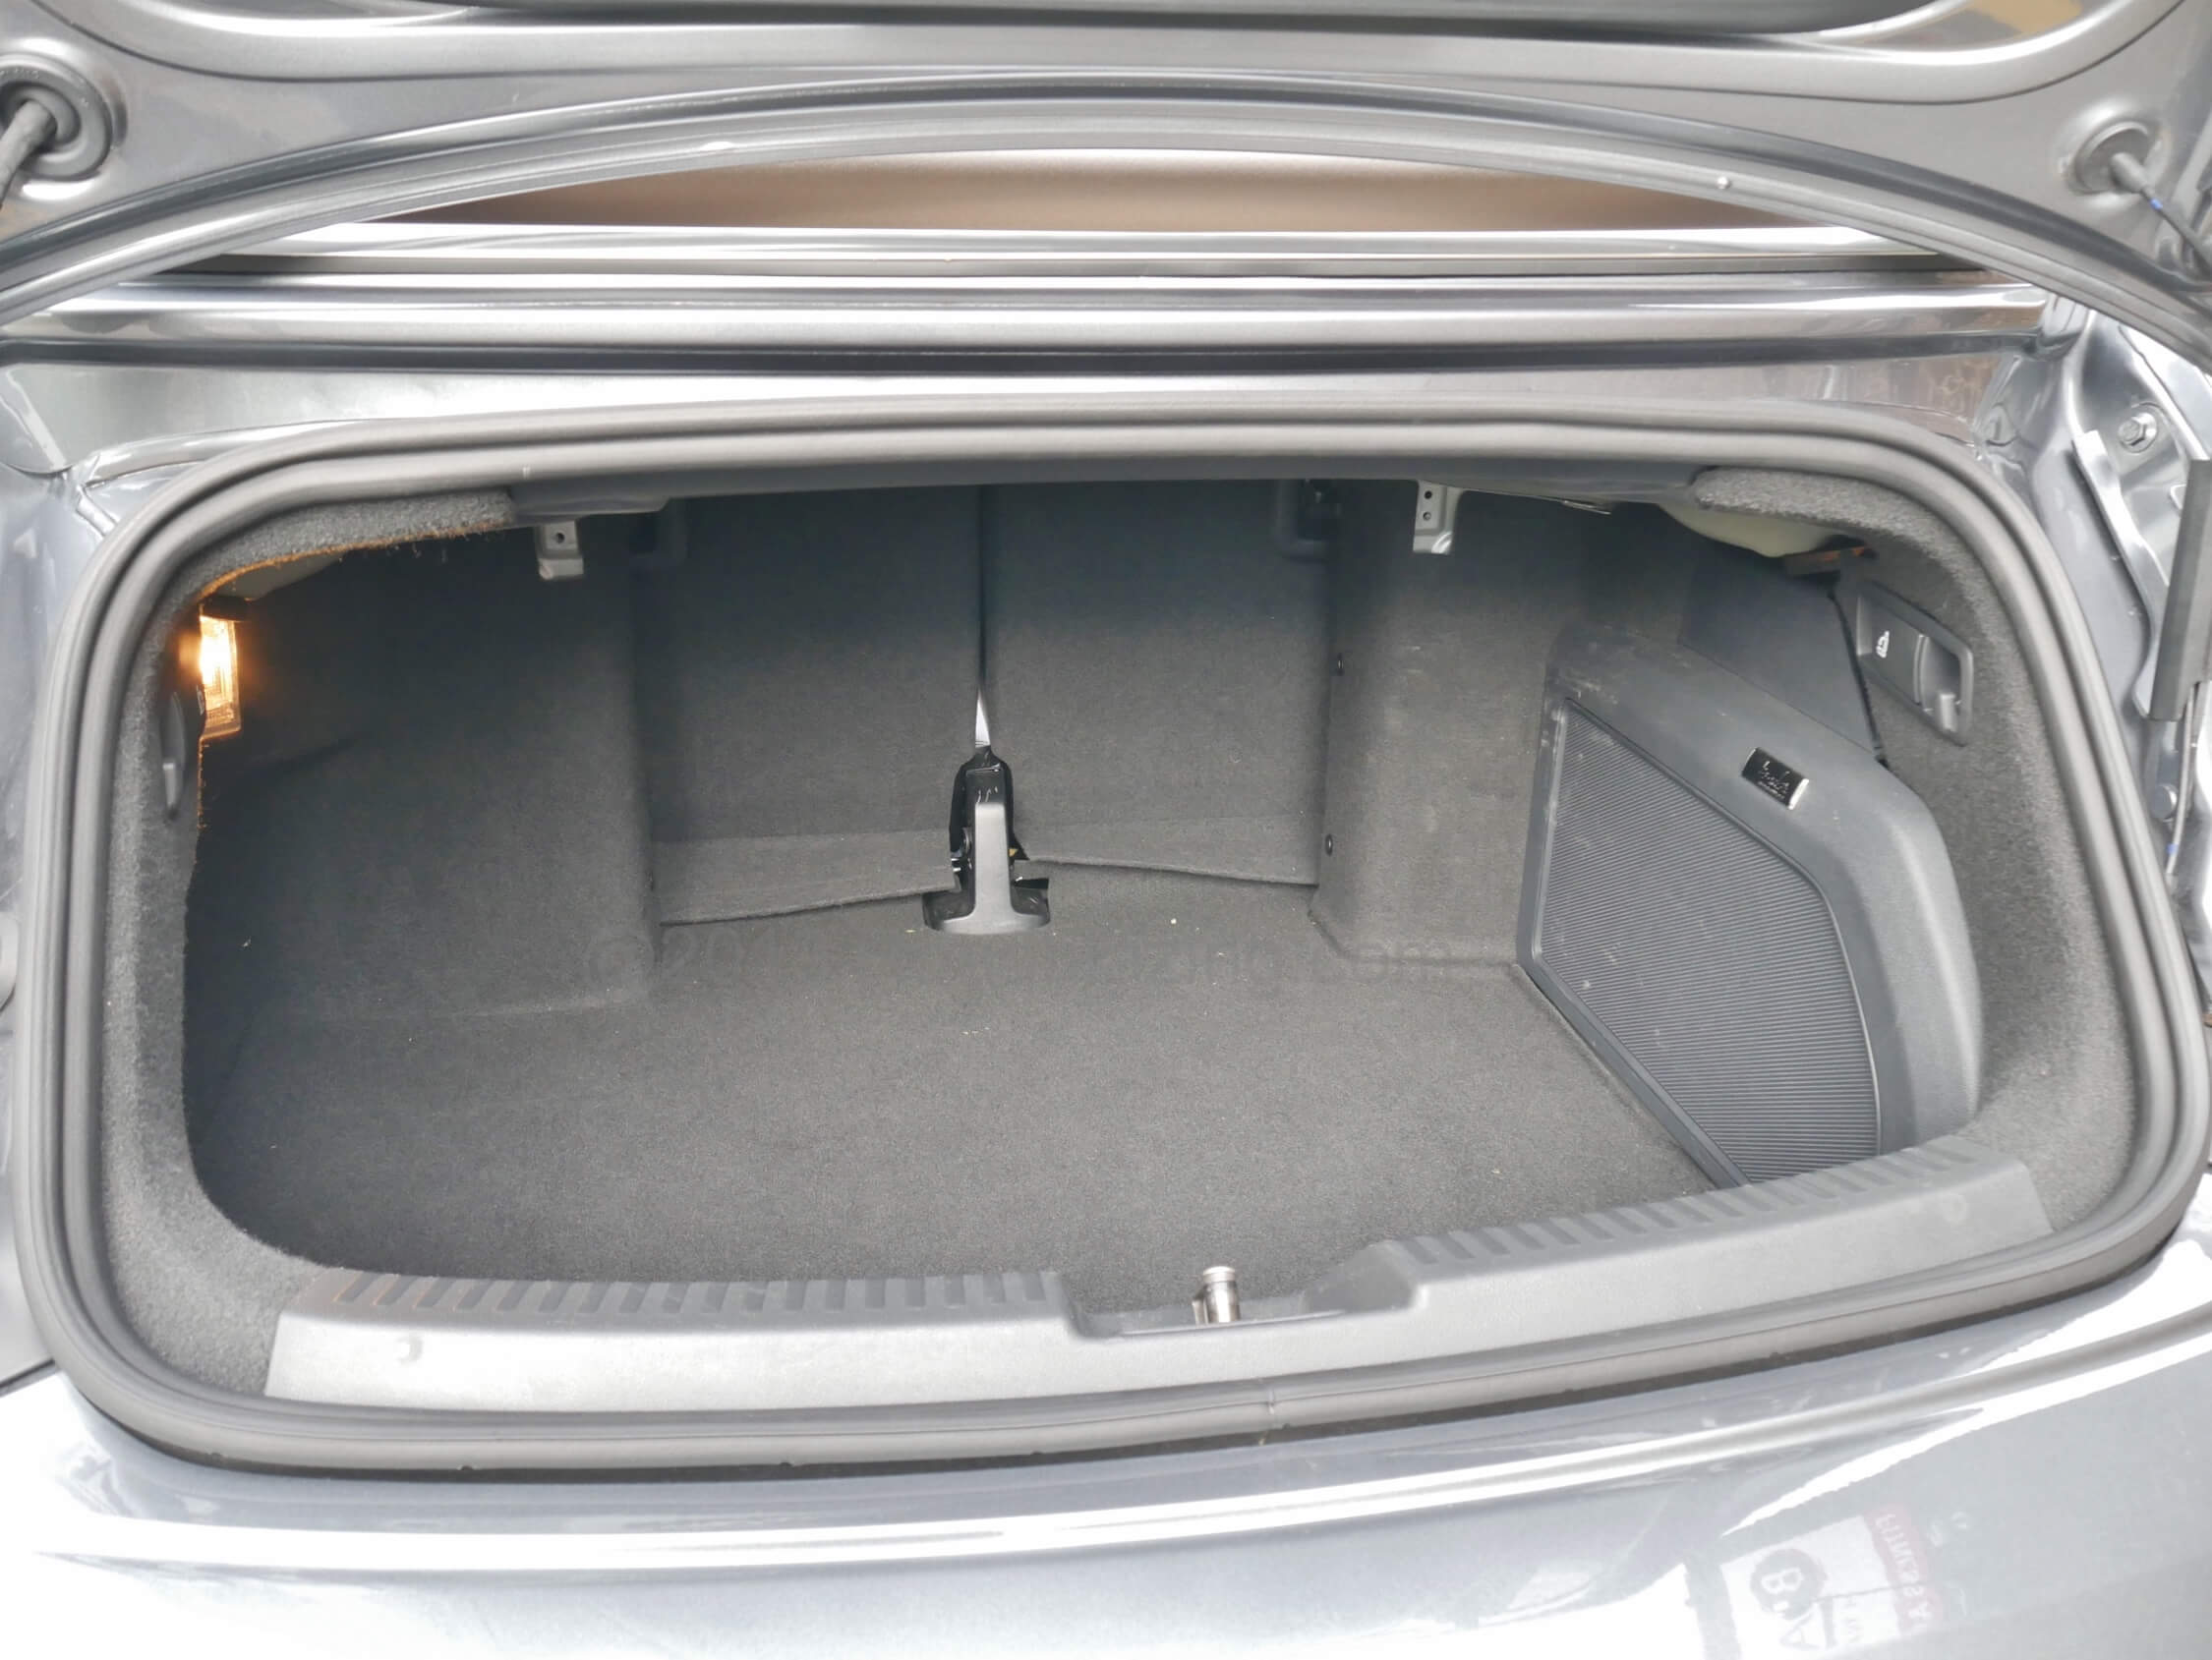 2019 Volkswagen Beetle Convertible Final Edition SEL: 4.7 cubic foot trunk w/ split folding rear seatback pass through